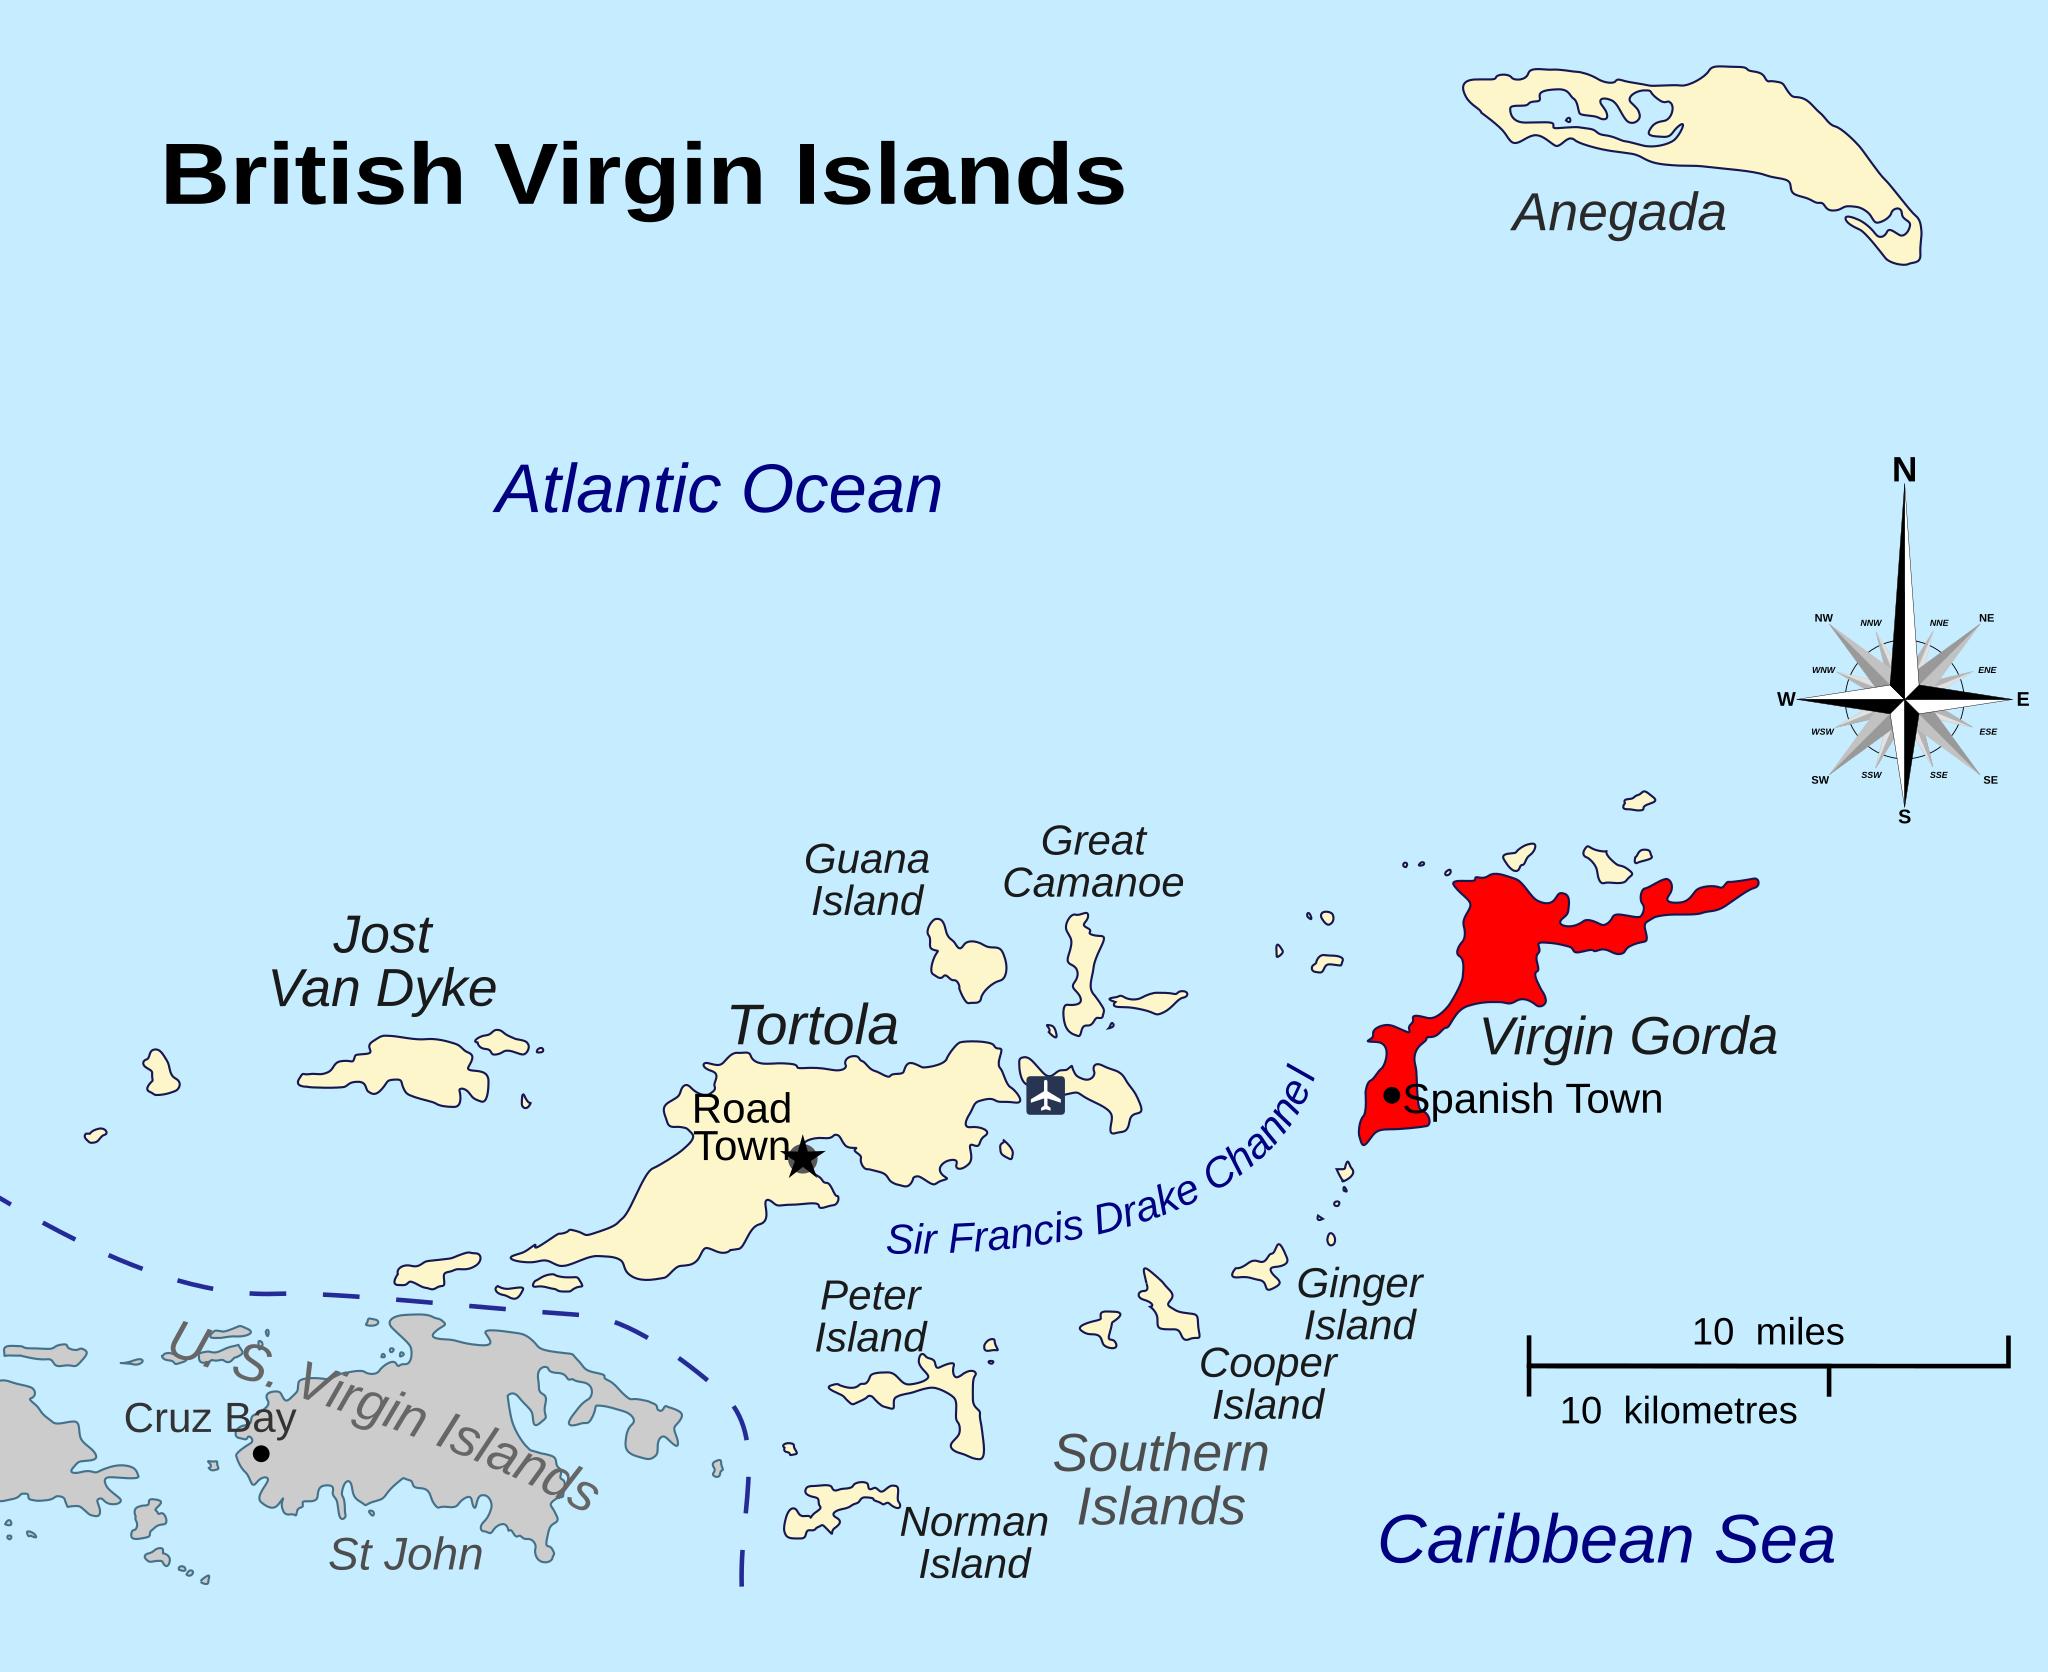 Anegada, British Virgin Islands